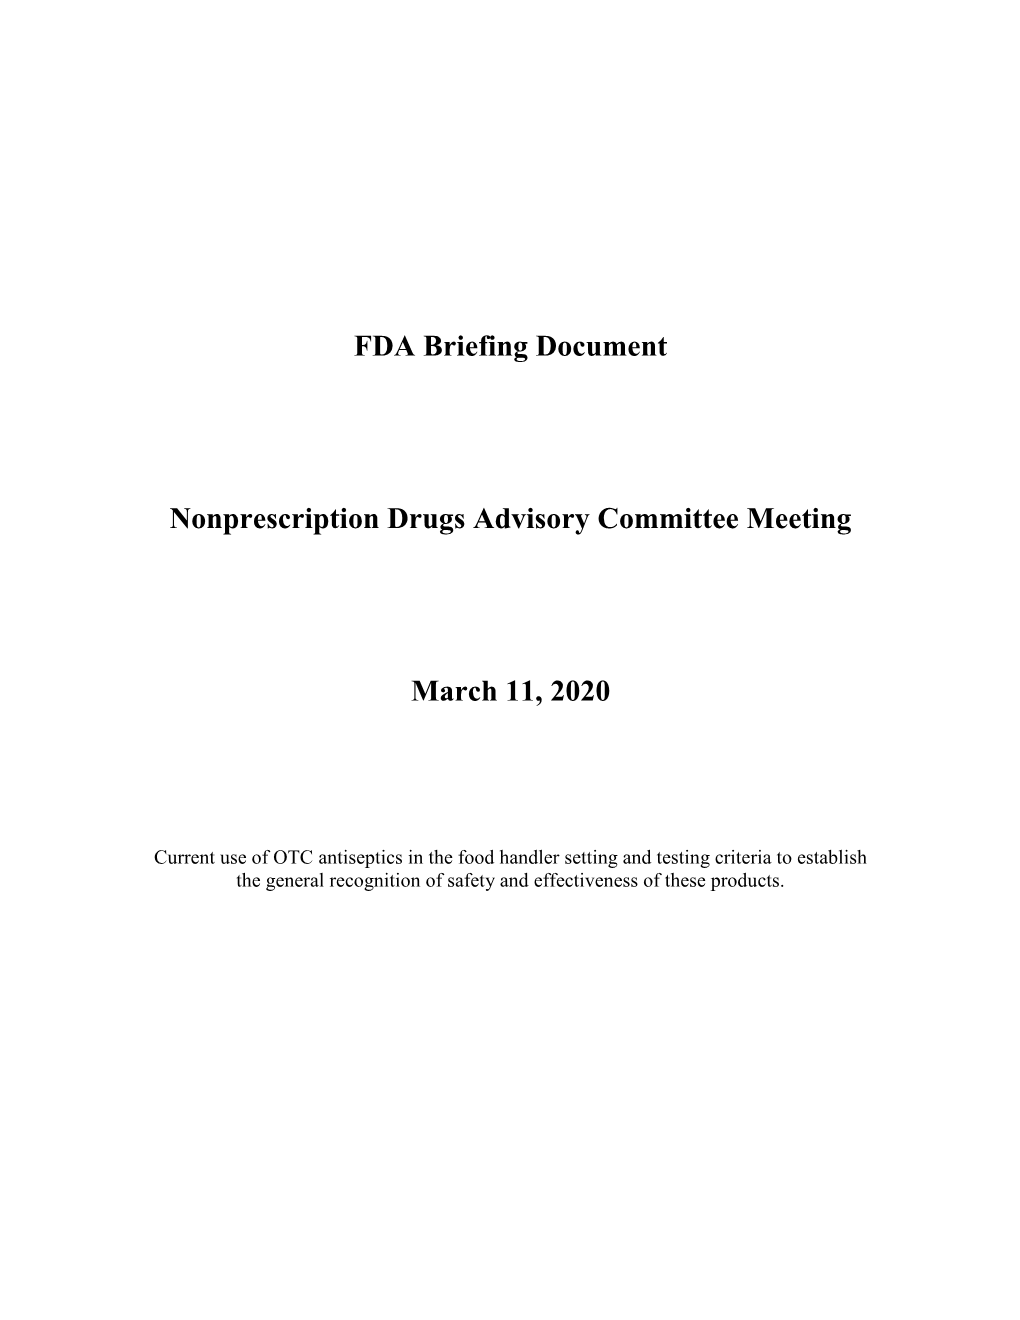 FDA Briefing Document Nonprescription Drugs Advisory